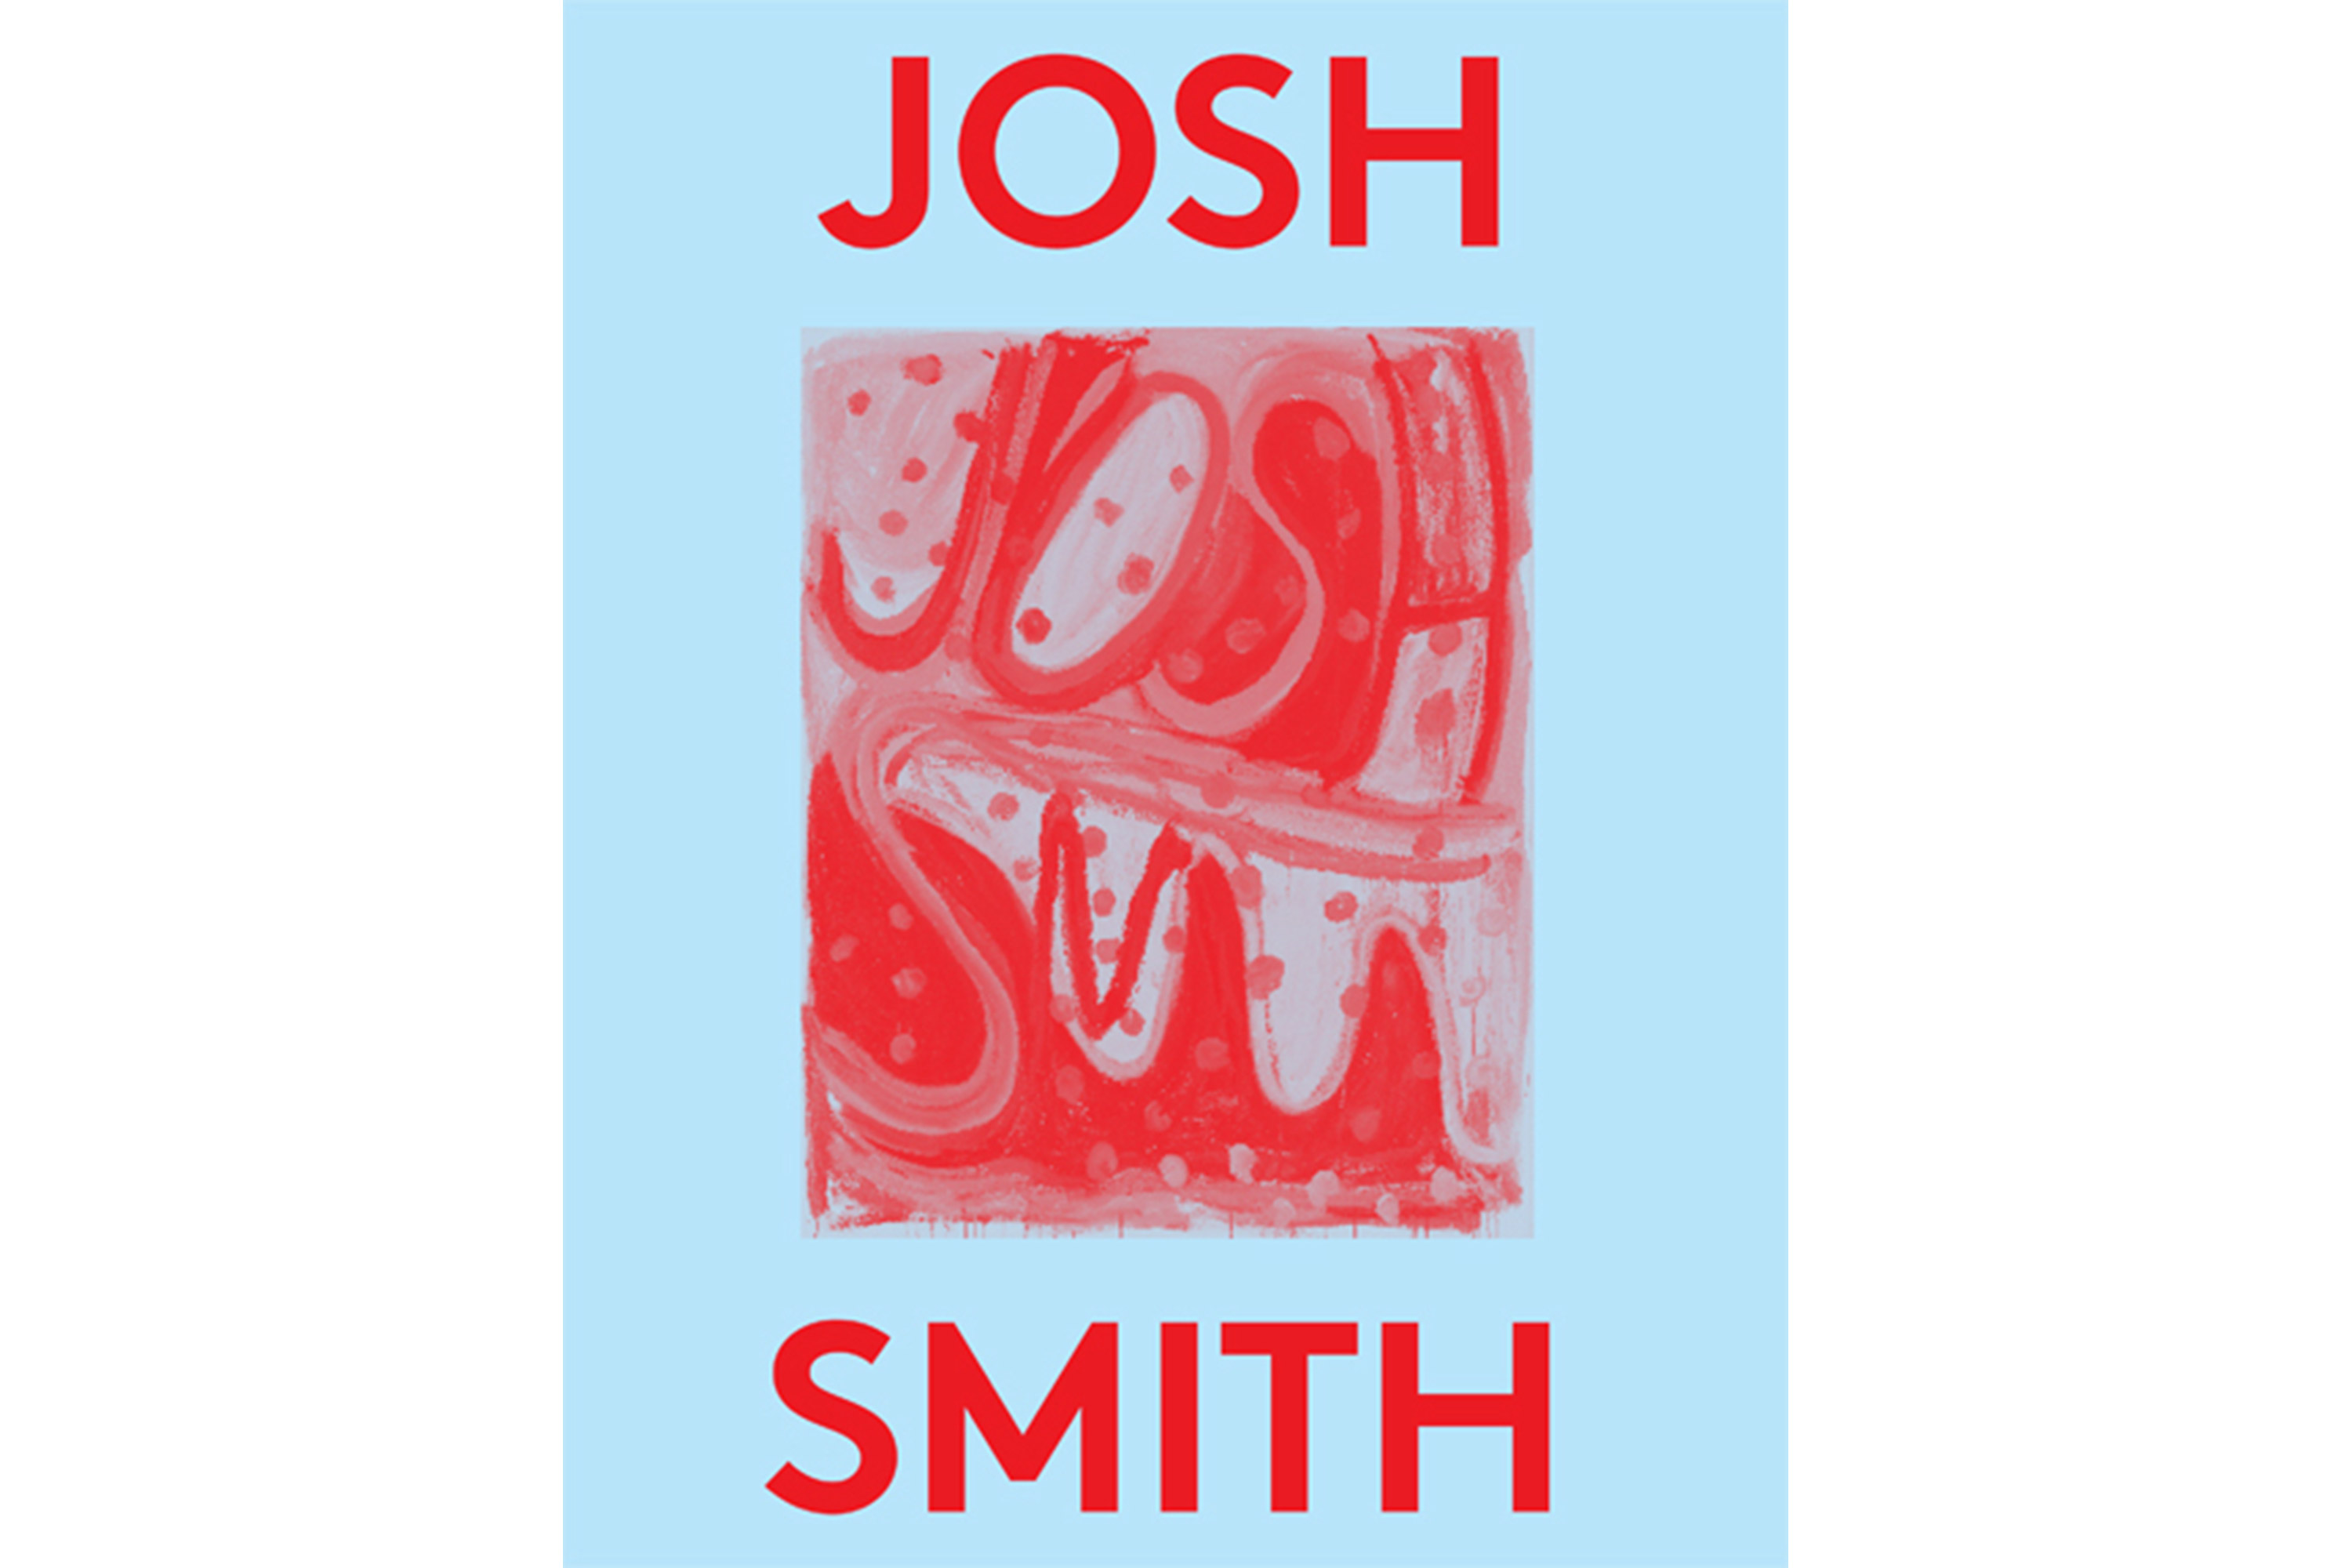 Josh Smith at David Zwirner